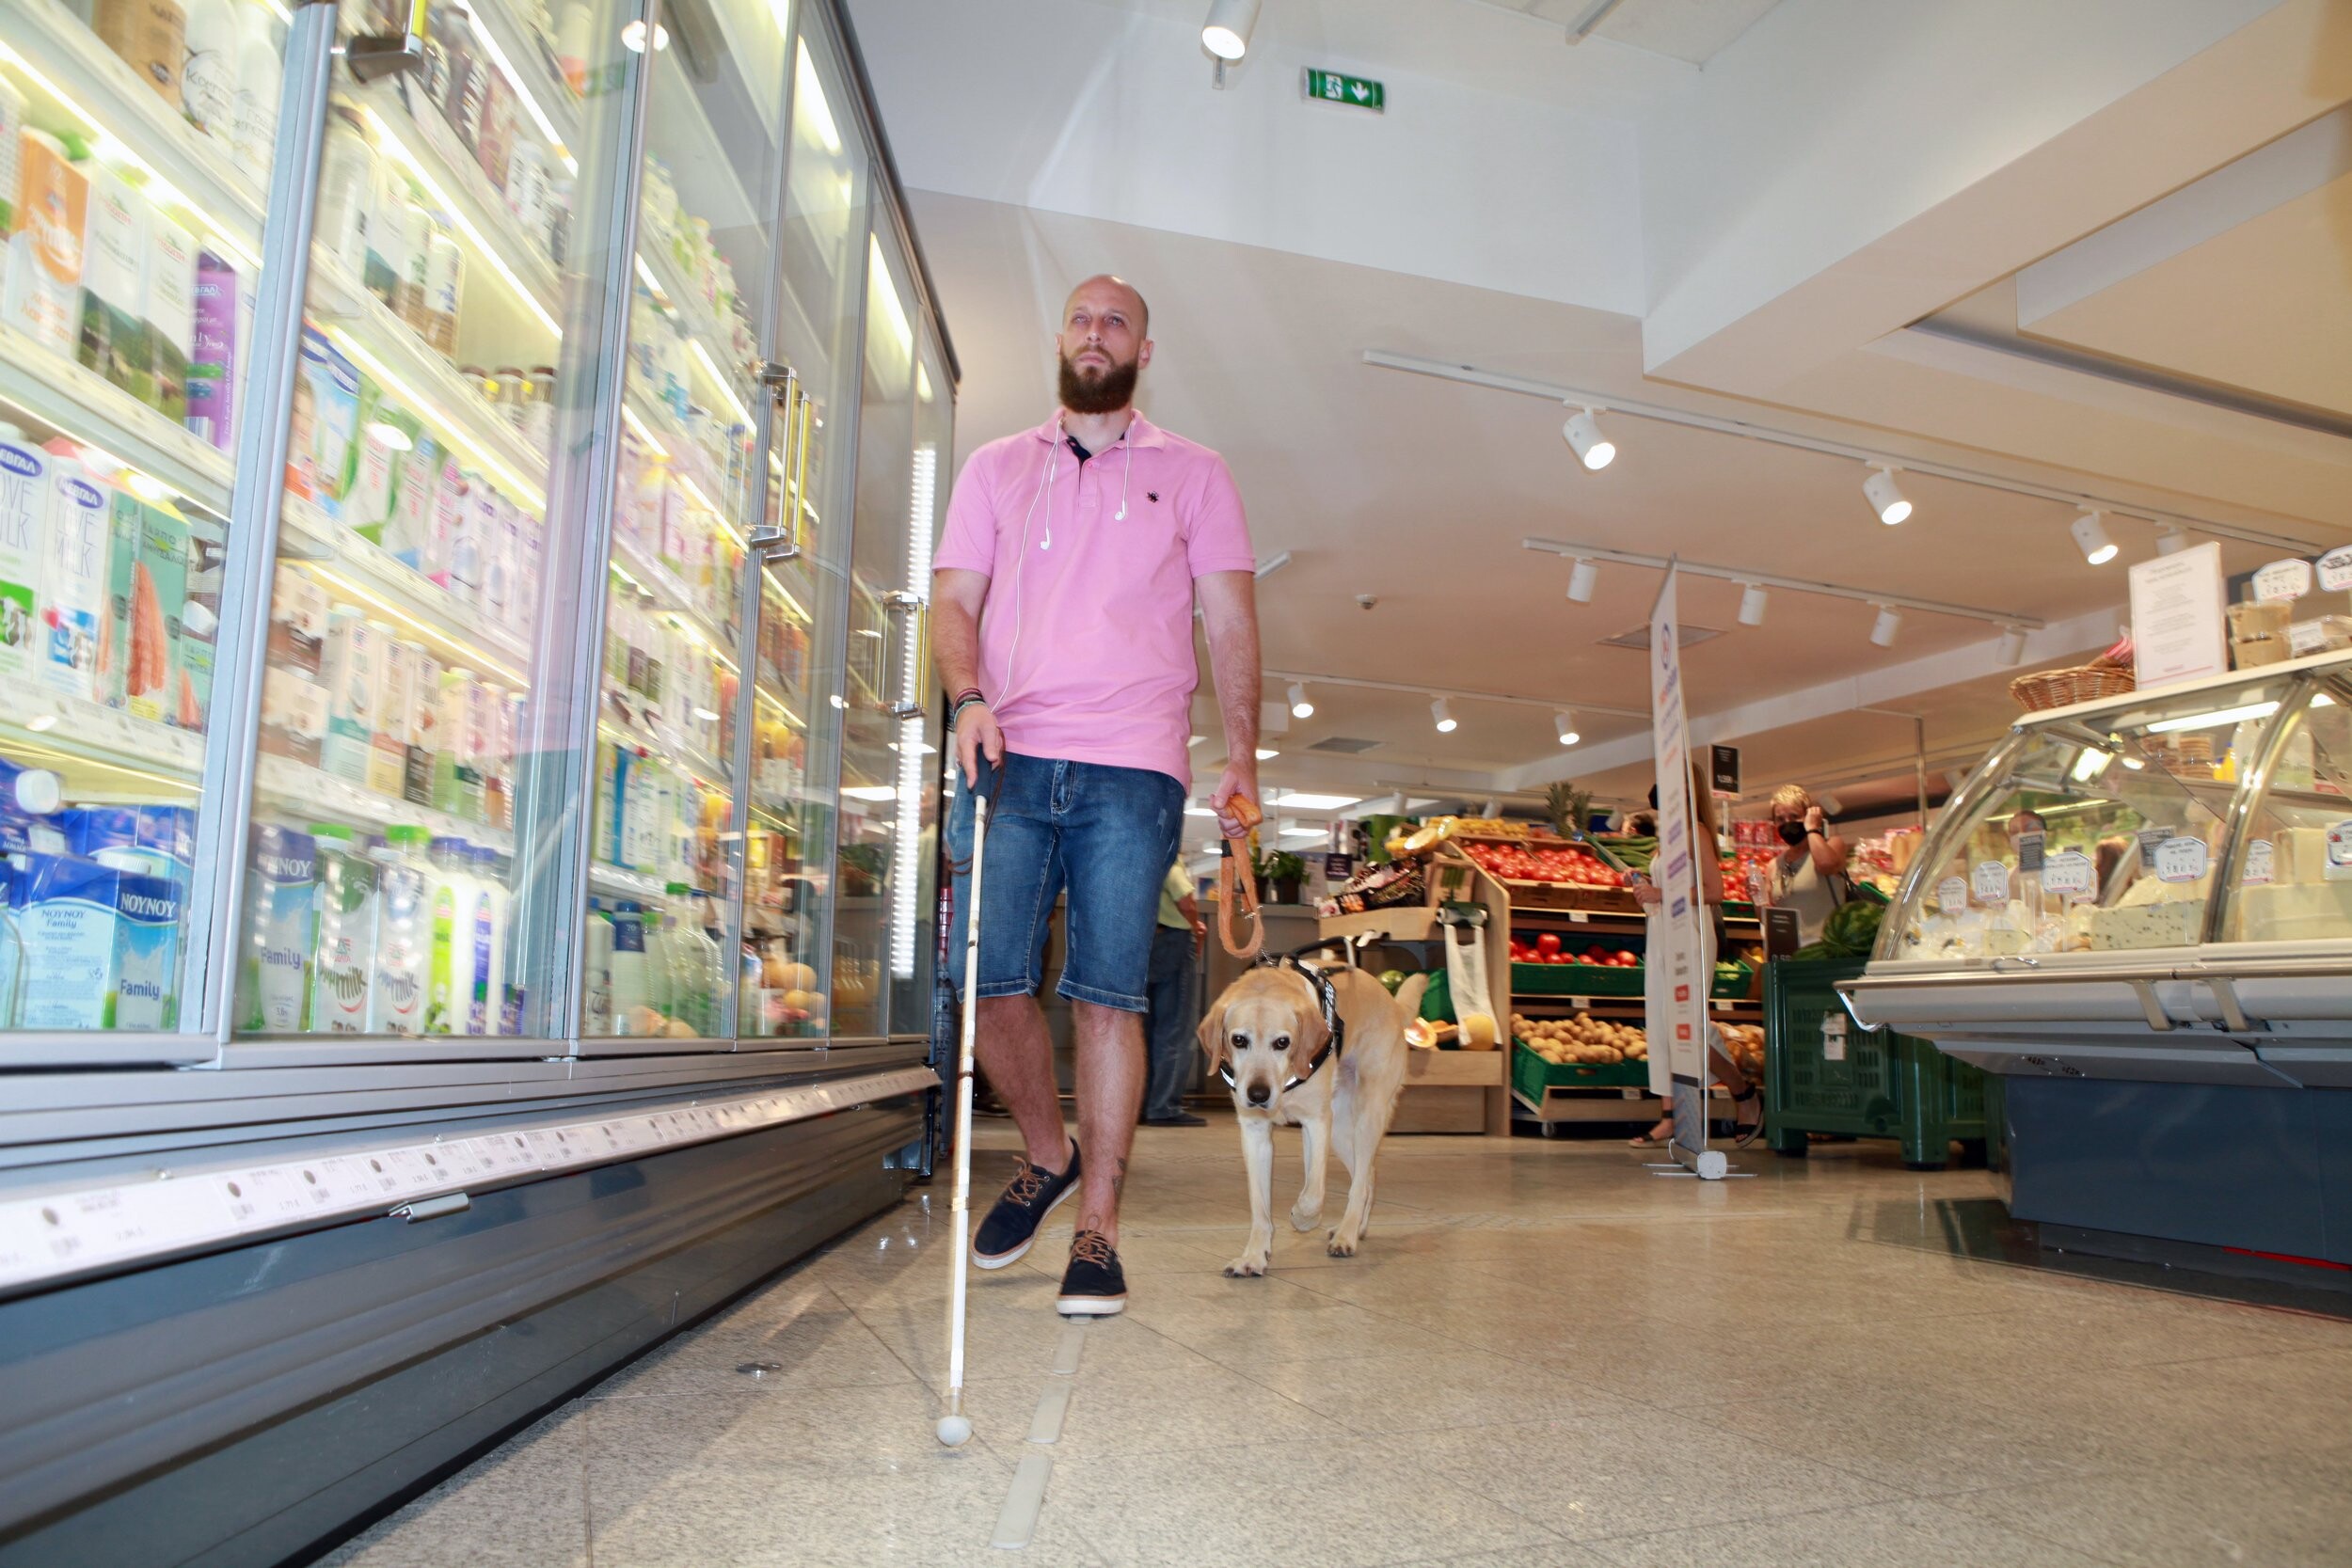 More information about "Εγκαινίασε το πρώτο σουπερμάρκετ στην Ελλάδα φιλικό για άτομα με οπτική αναπηρία"